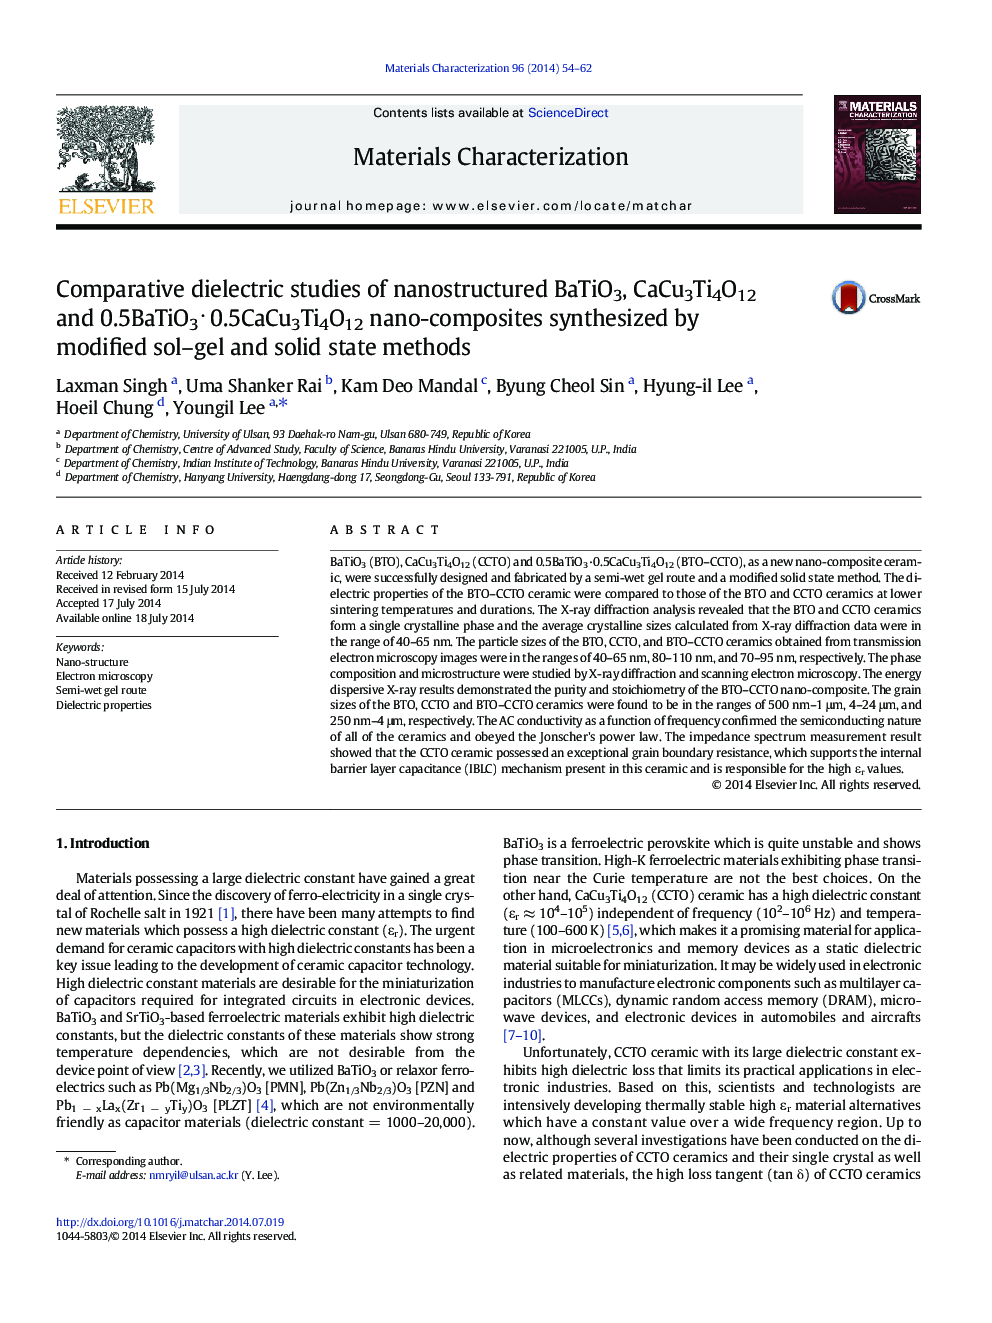 Comparative dielectric studies of nanostructured BaTiO3, CaCu3Ti4O12 and 0.5BaTiO3âÂ 0.5CaCu3Ti4O12 nano-composites synthesized by modified sol-gel and solid state methods